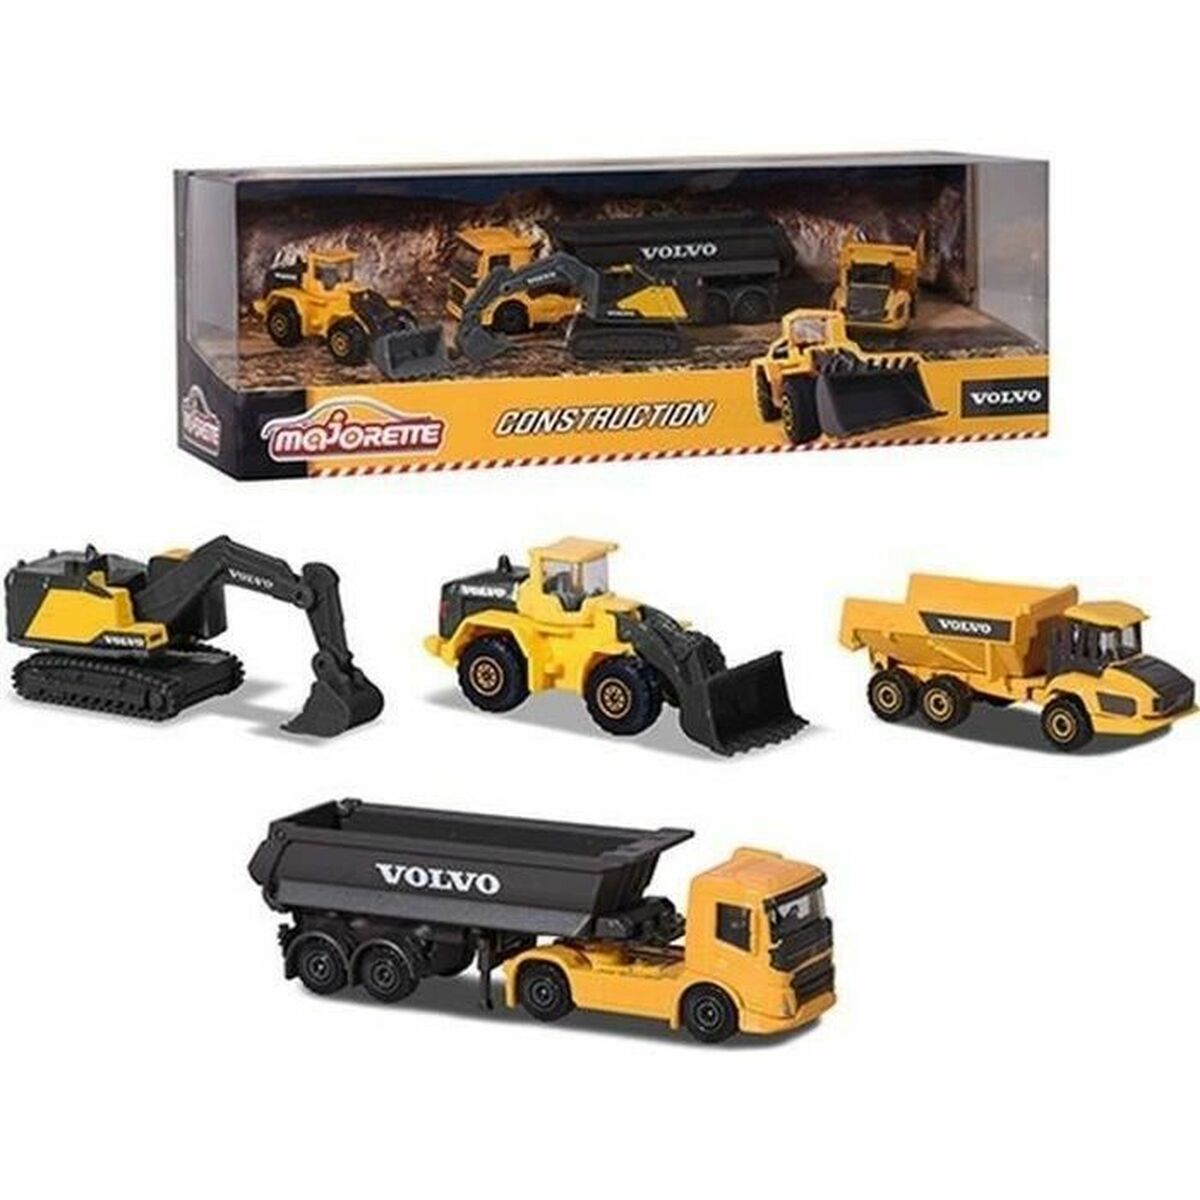 Spielzeug-Traktor Majorette Construction